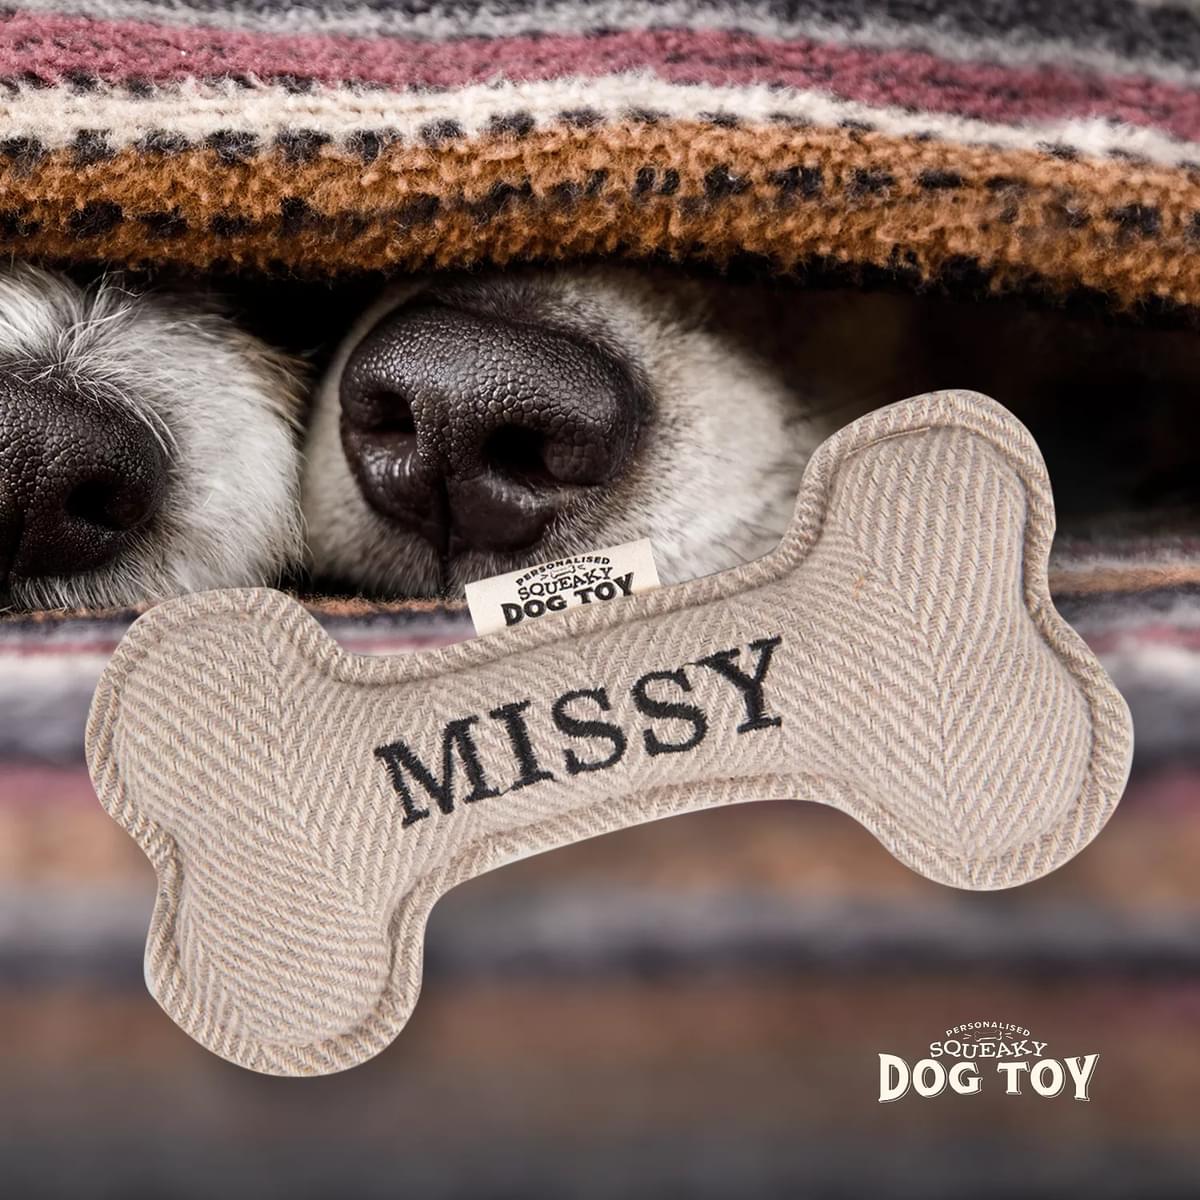 Named Squeaky Dog Toy- Missy. Bone shaped herringbone tweed pattern dog toy. 